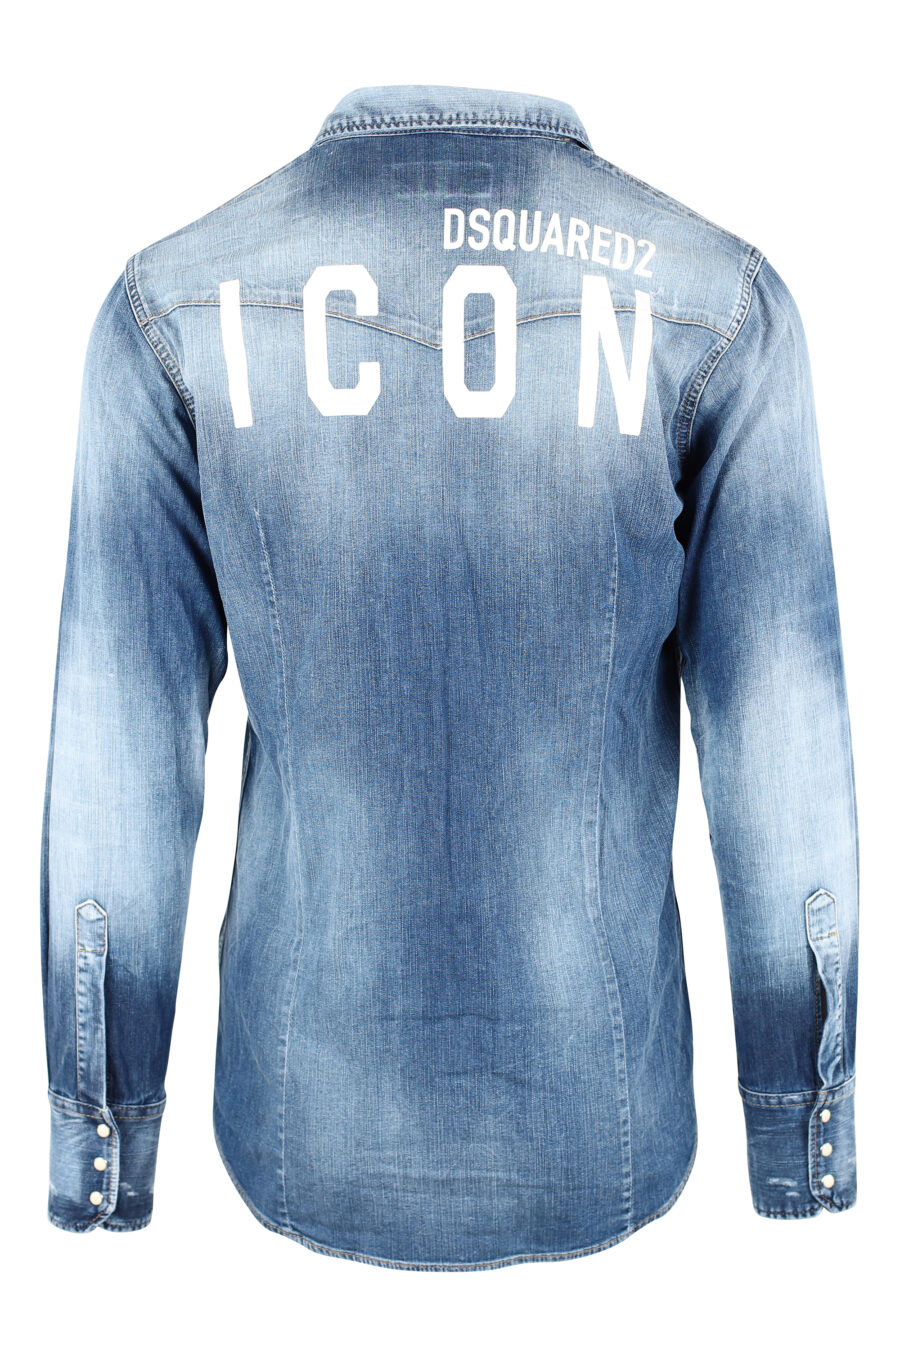 Getragenes blaues Denim-Hemd "Icon Western" - IMG 9768